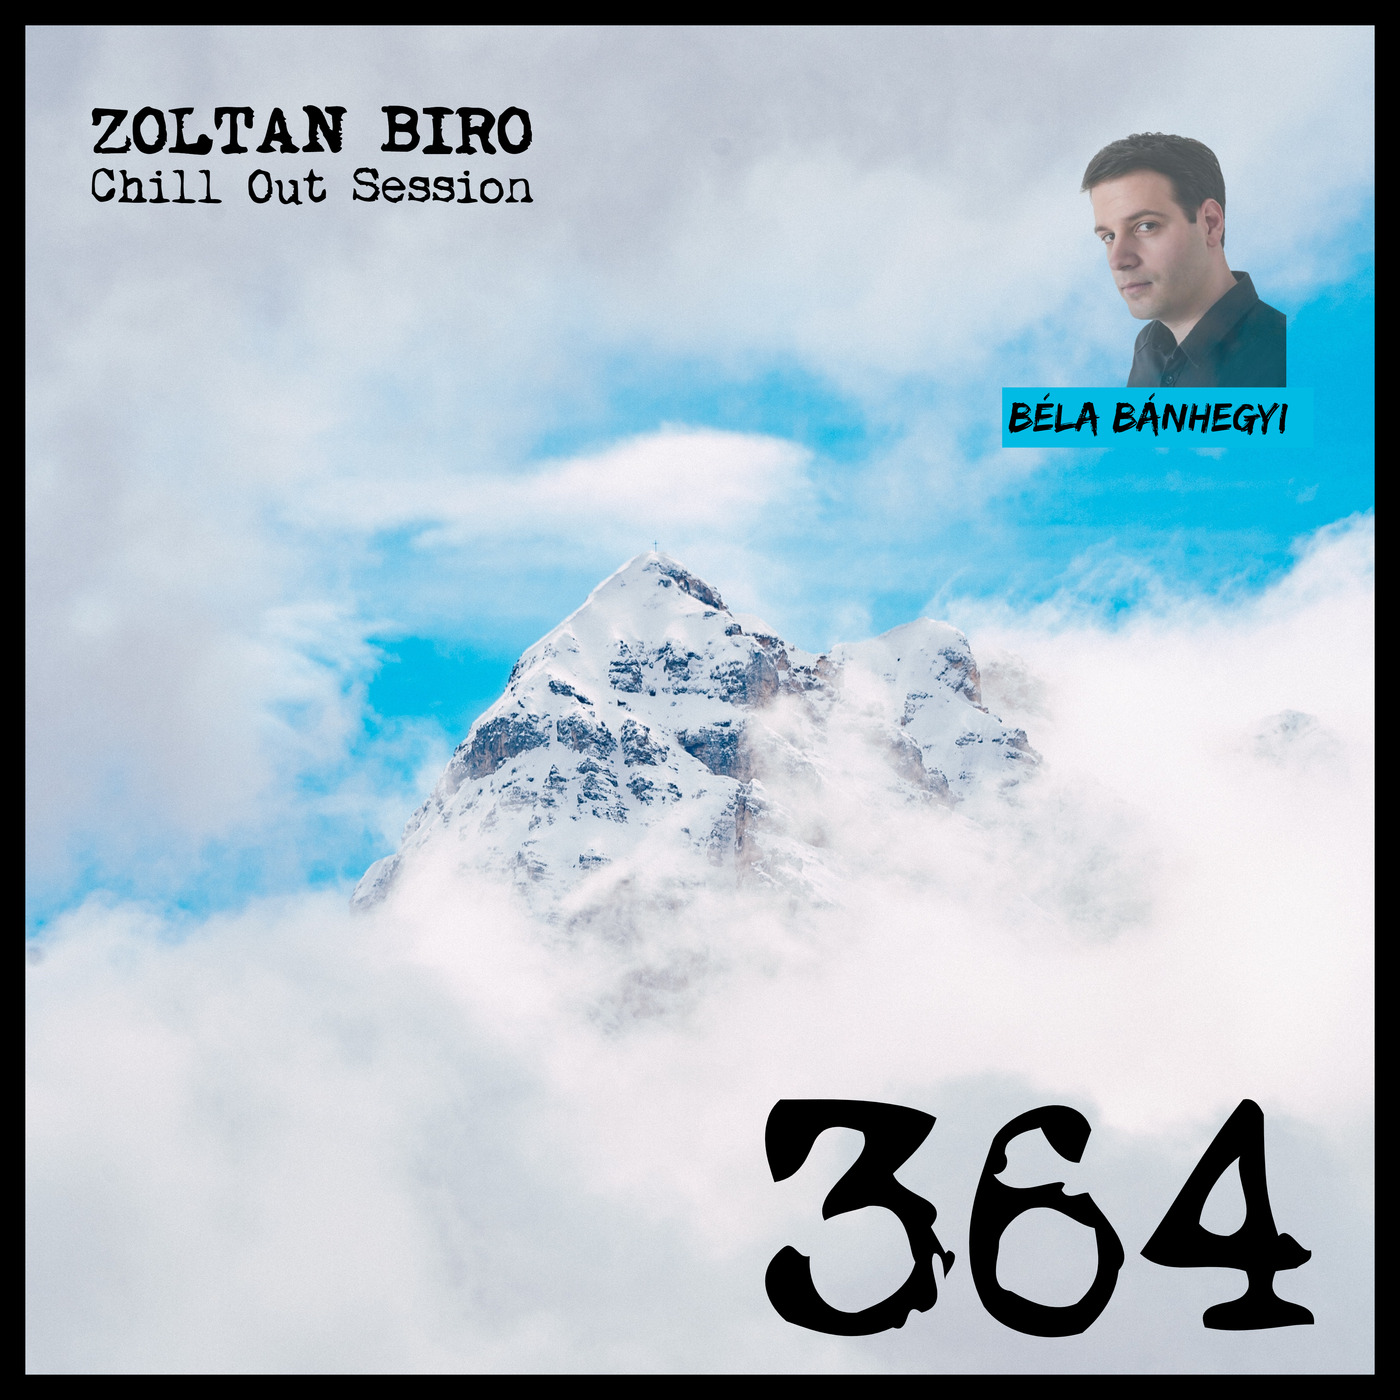 Zoltan Biro - Chill Out Session 364 [including: Bela Banhegyi Special Mix]